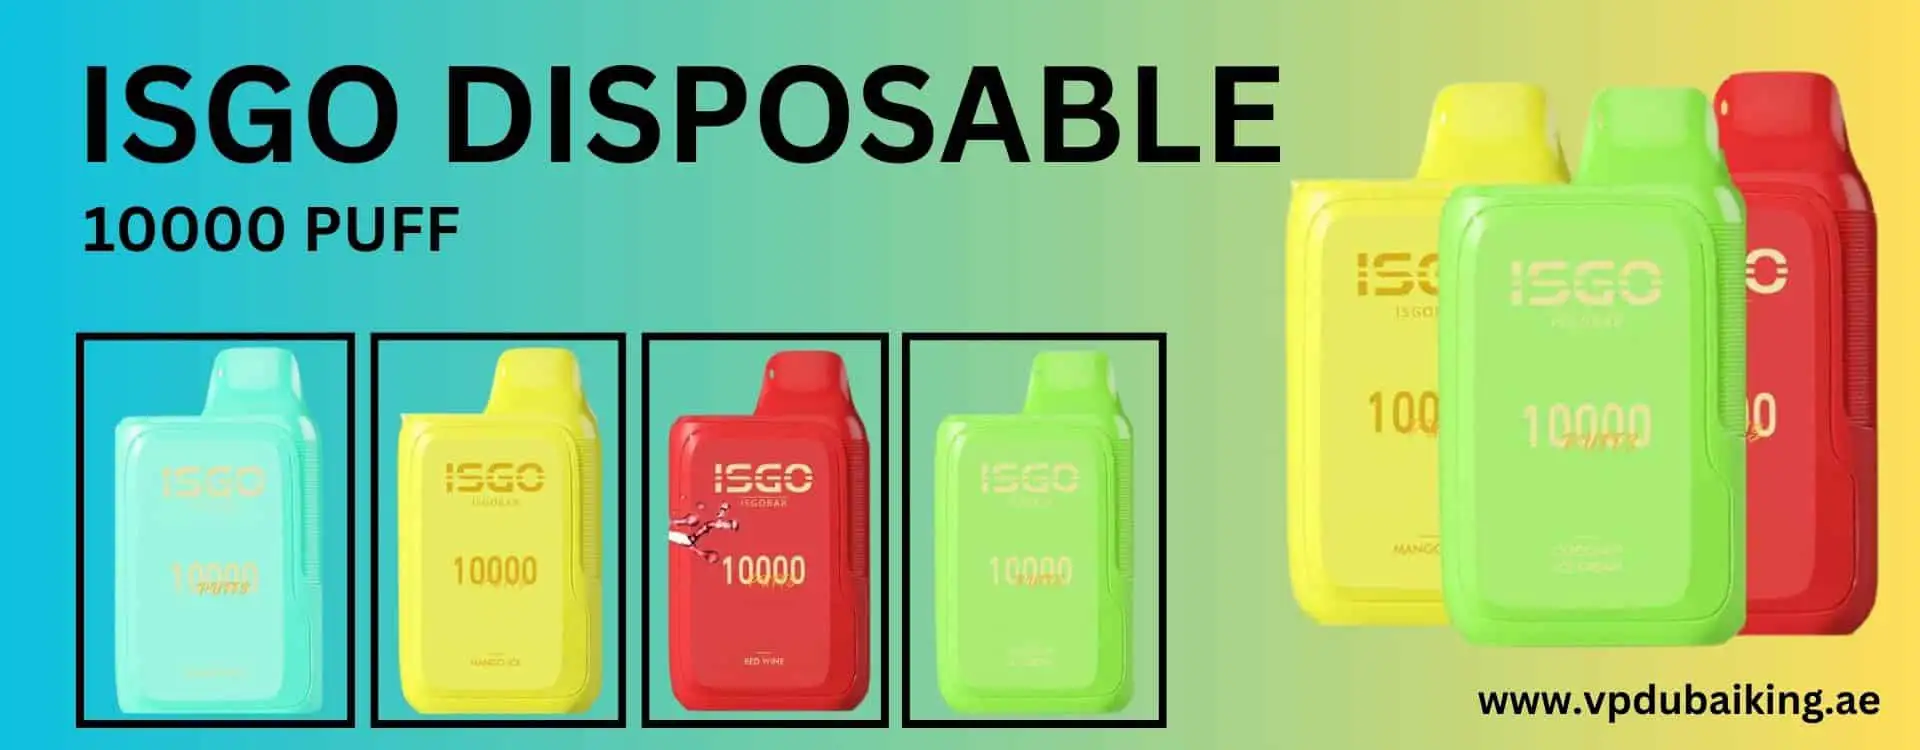 Buy ISGO Disposable in Dubai